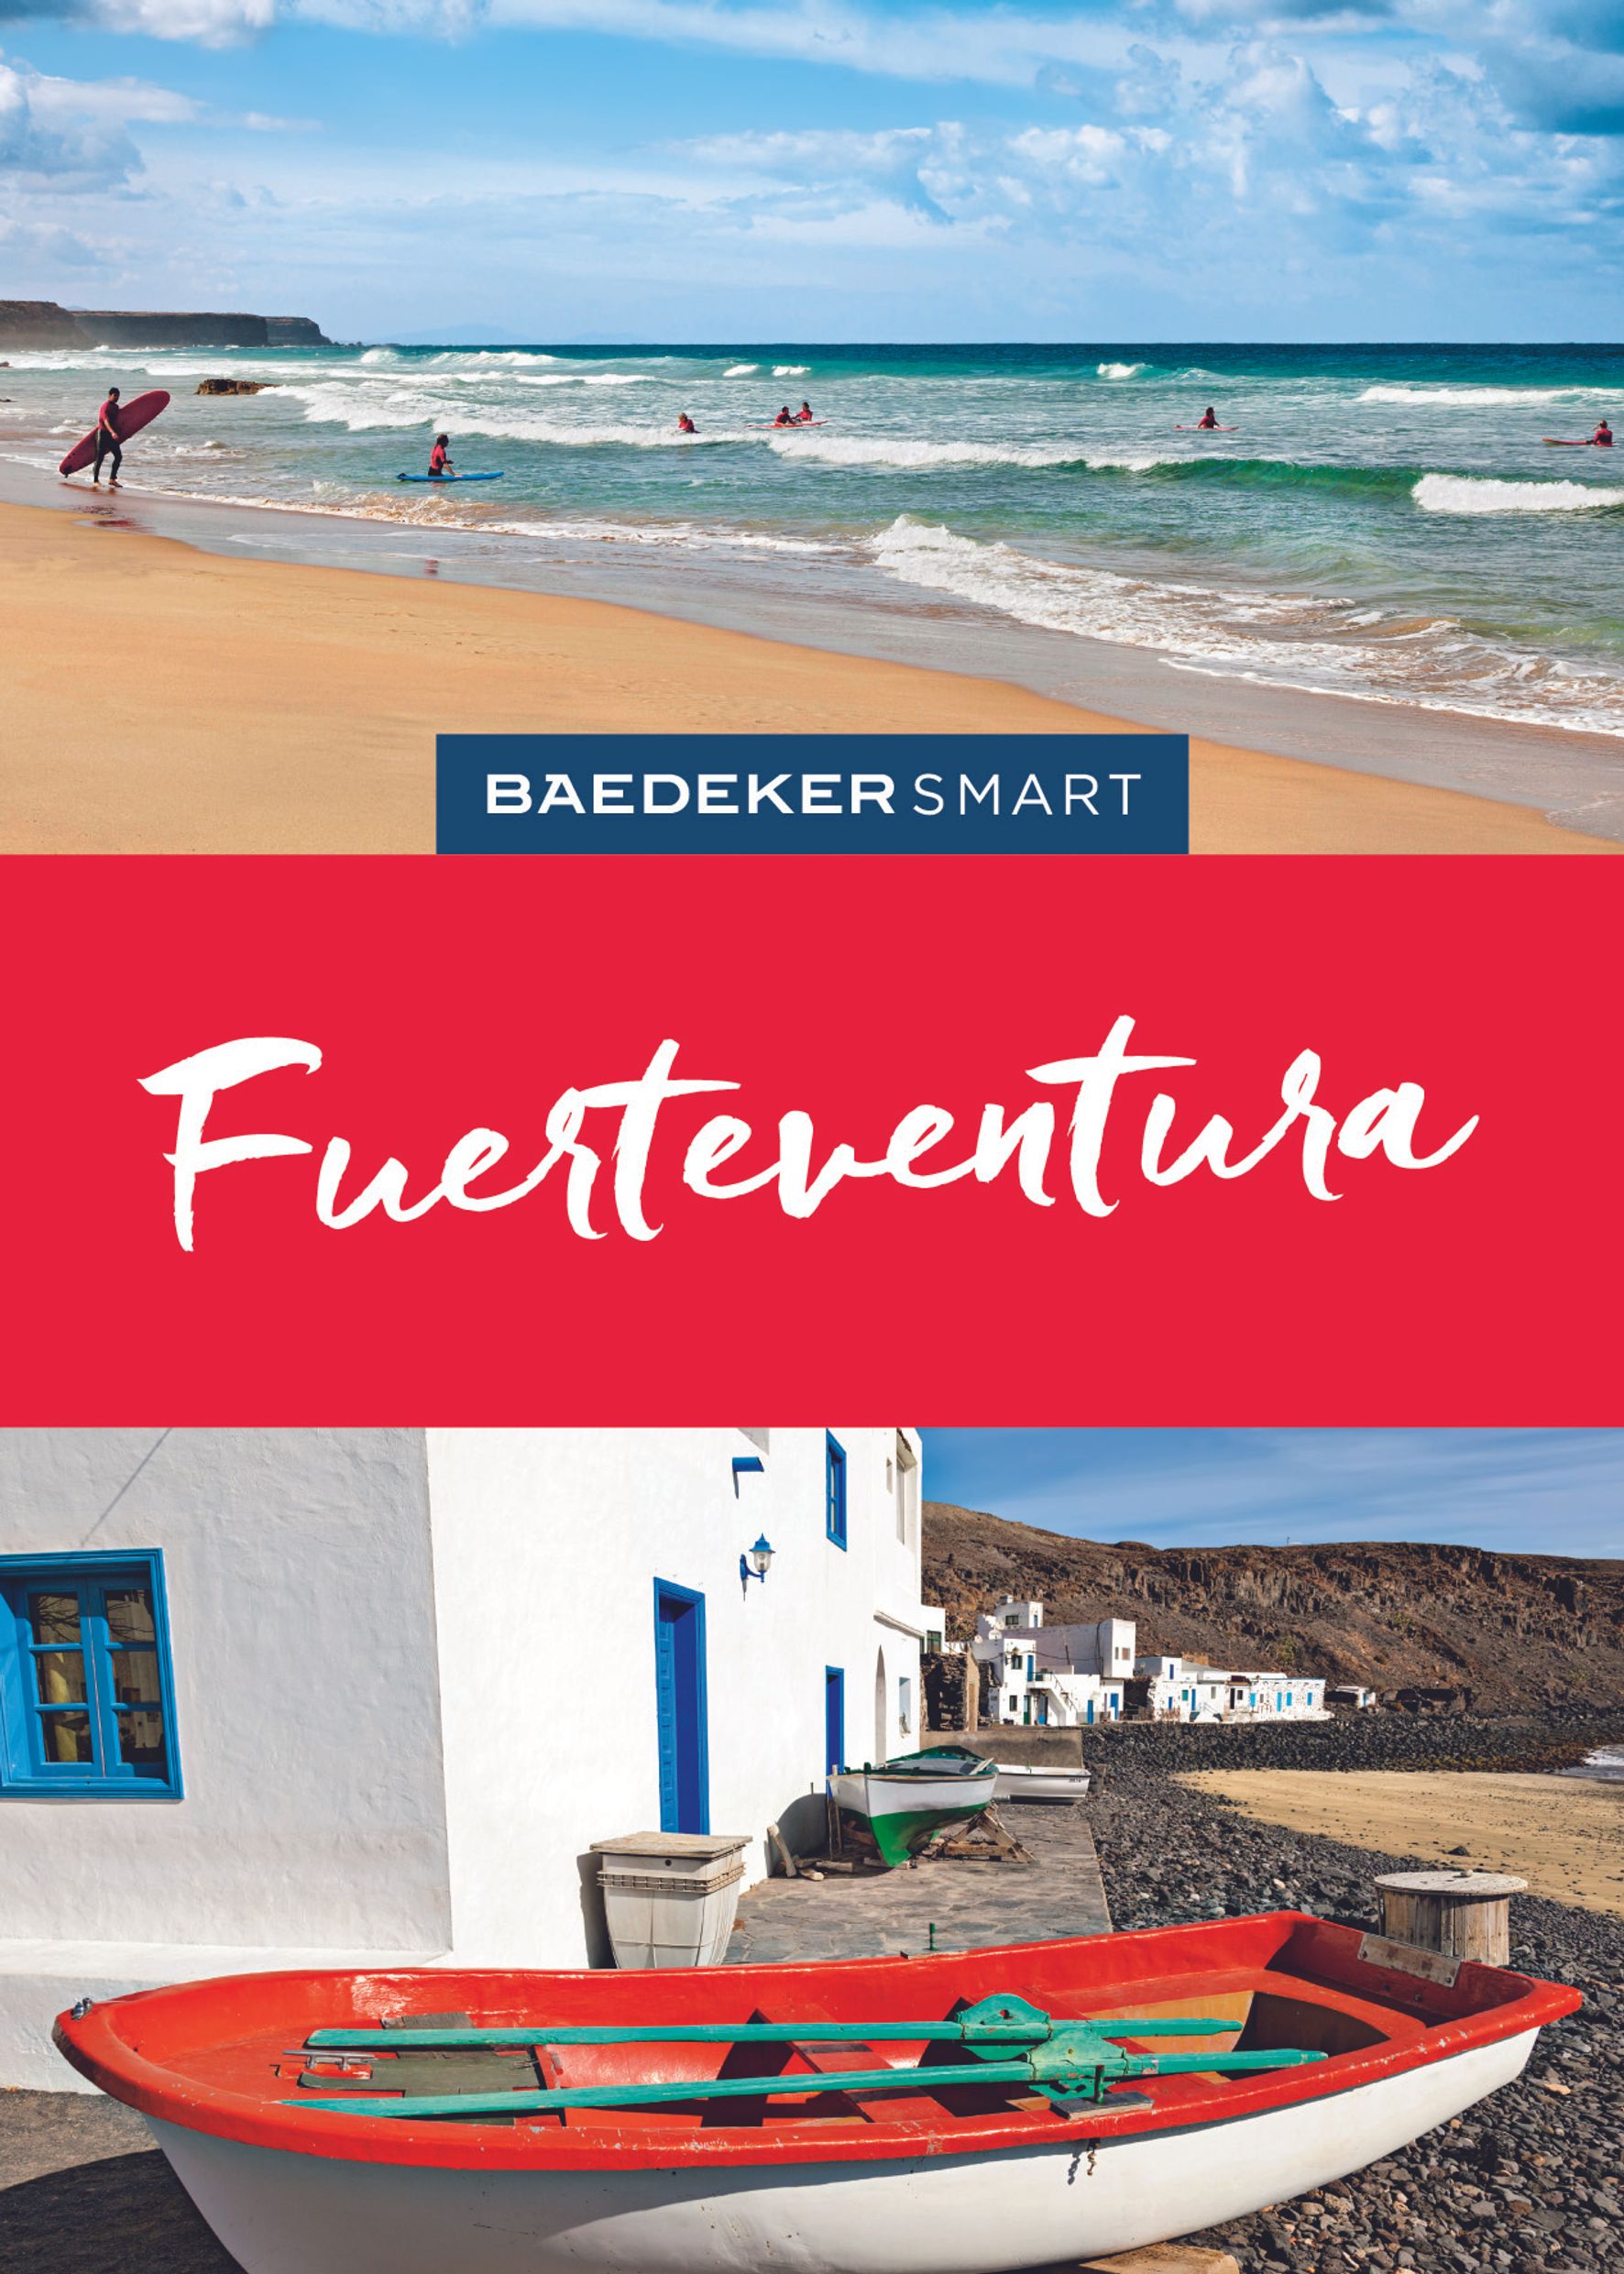 Baedeker Fuerteventura (eBook)